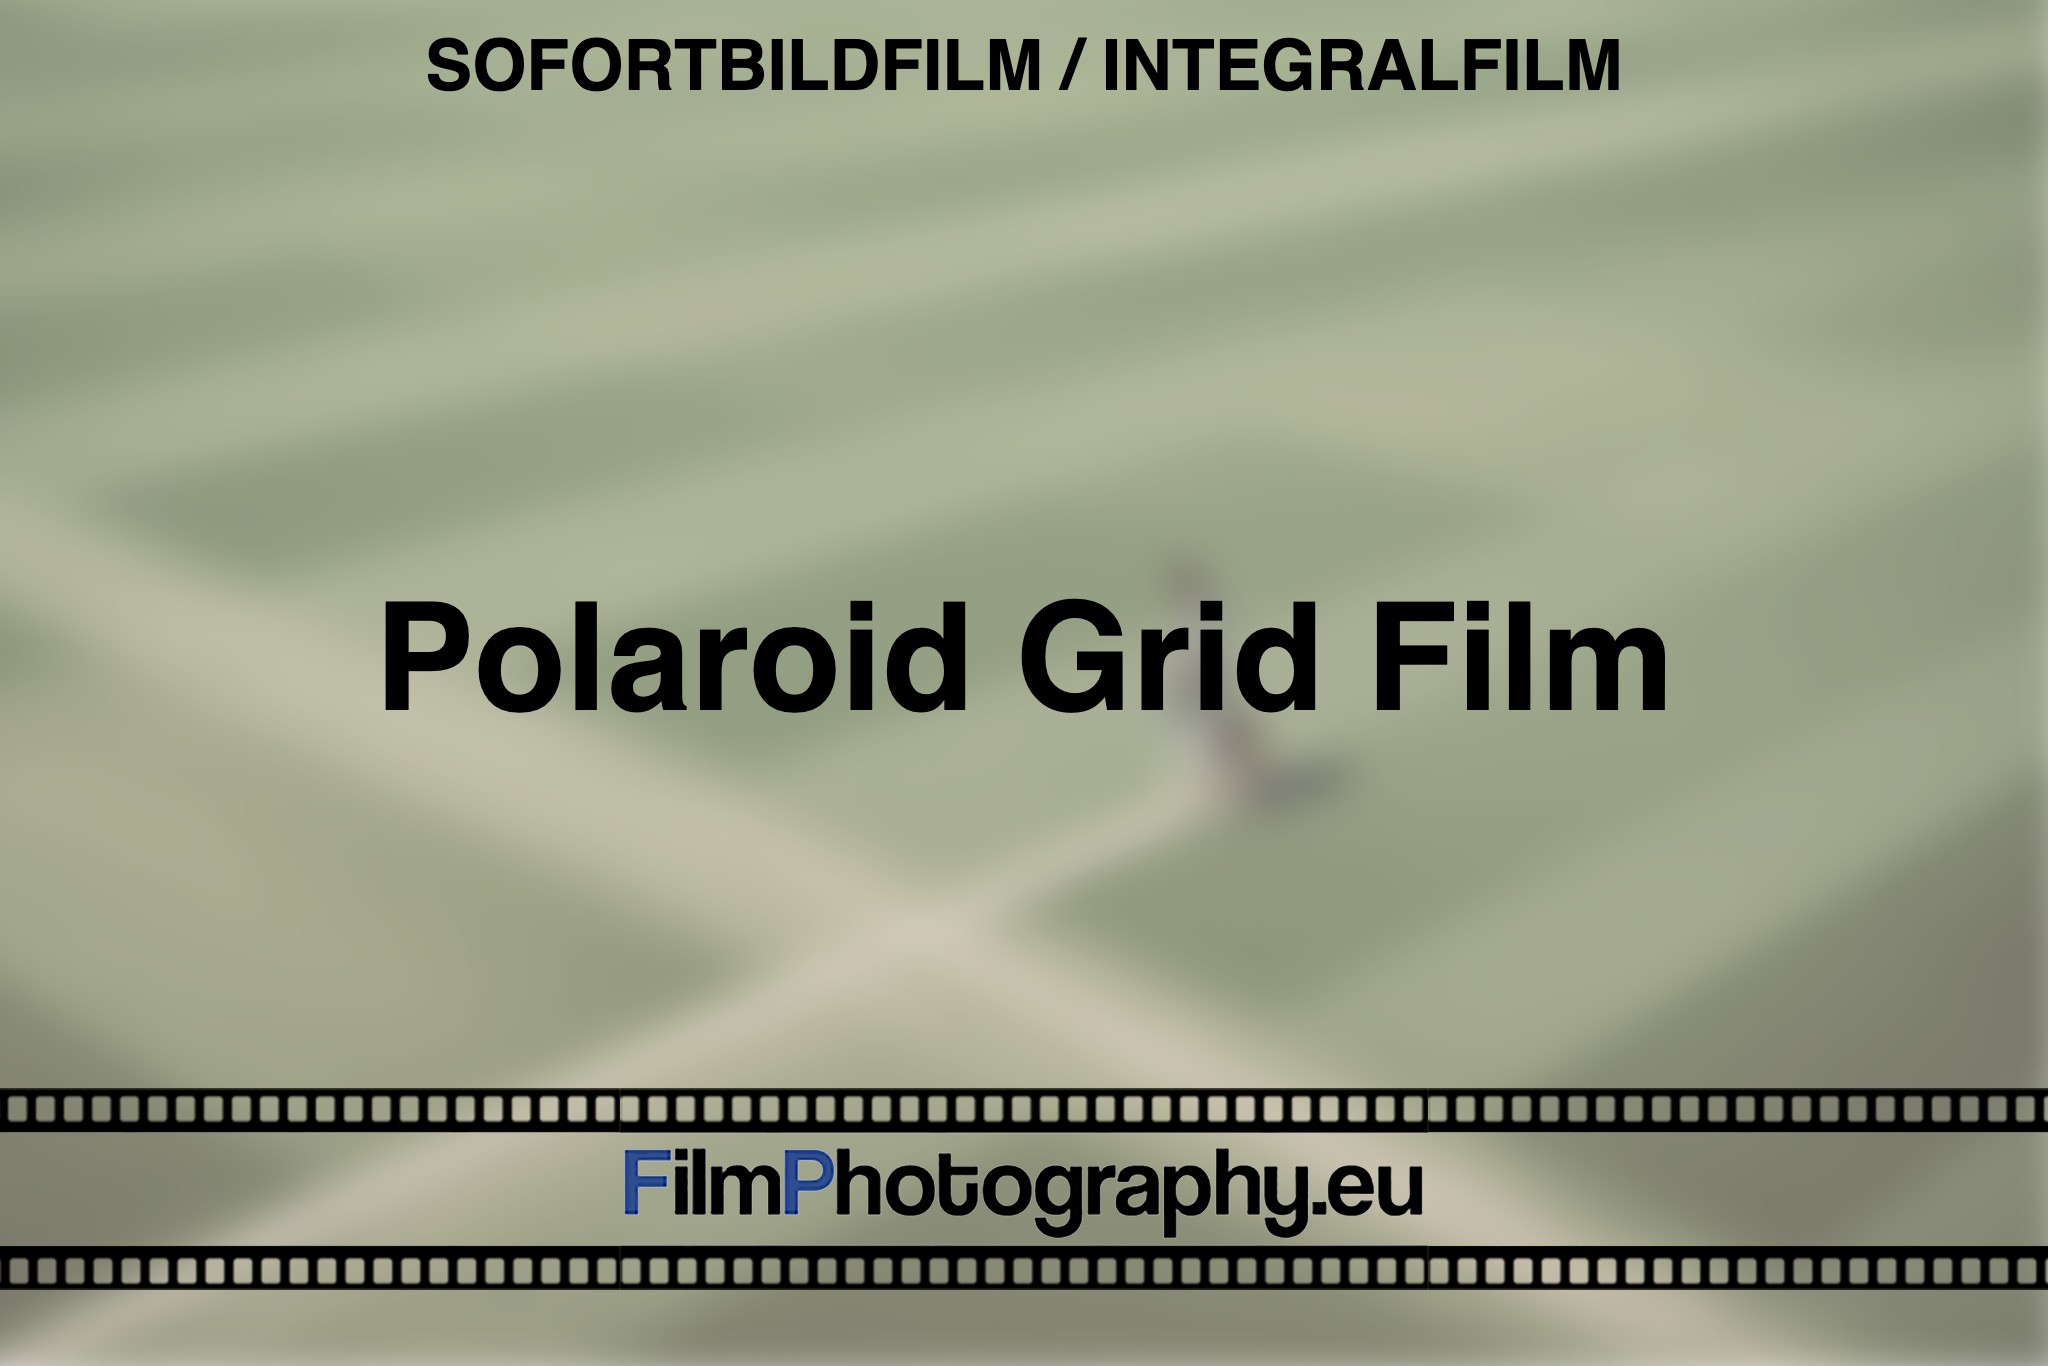 polaroid-grid-film-sofortbildfilm-integralfilm-fp-bnv